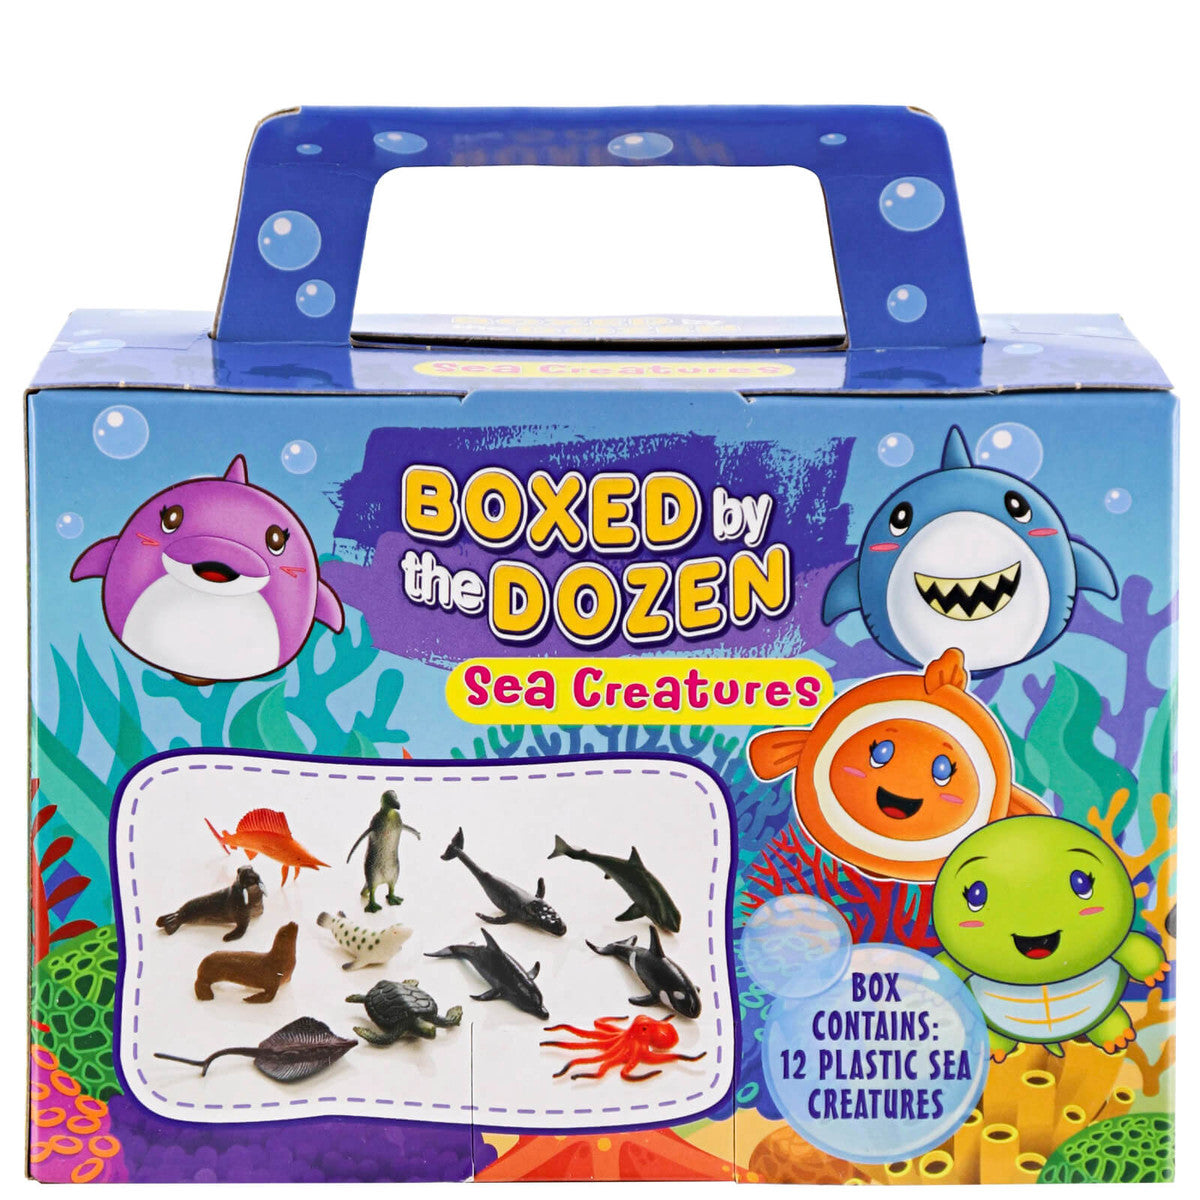 Boxed by The Dozen - Sea Creatures